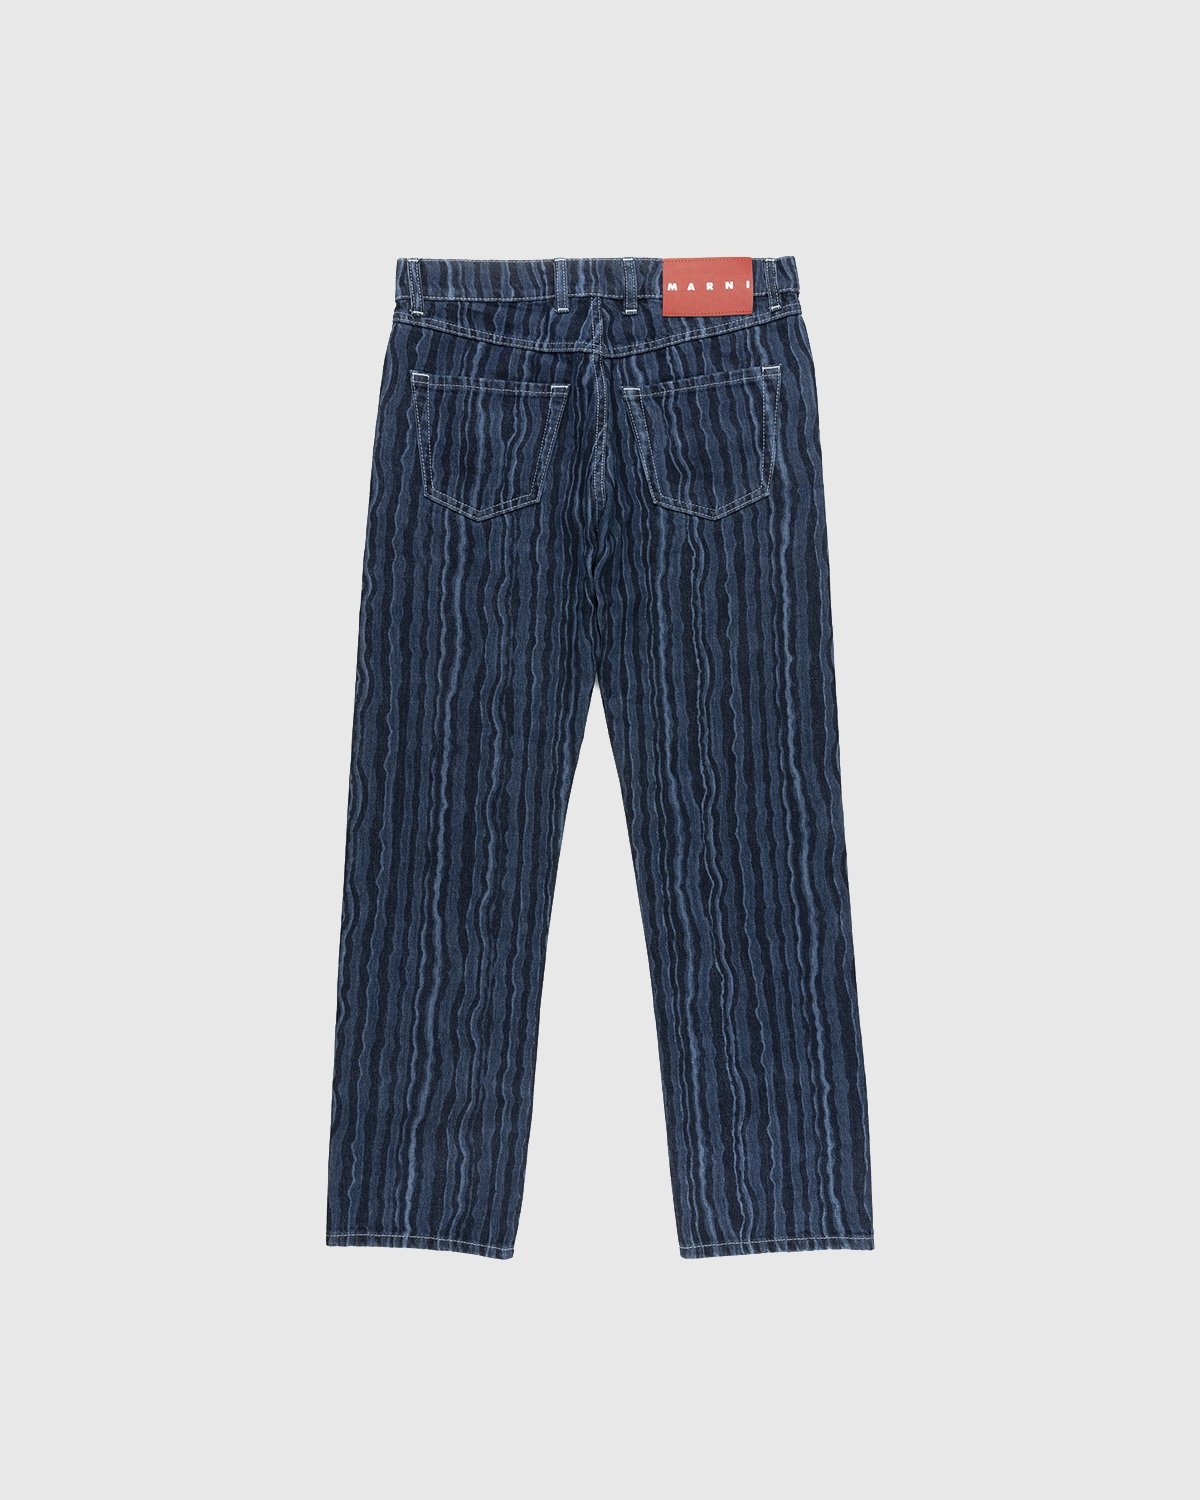 Marni – Abstract Print Wide Leg Jeans Blue - Pants - Blue - Image 2